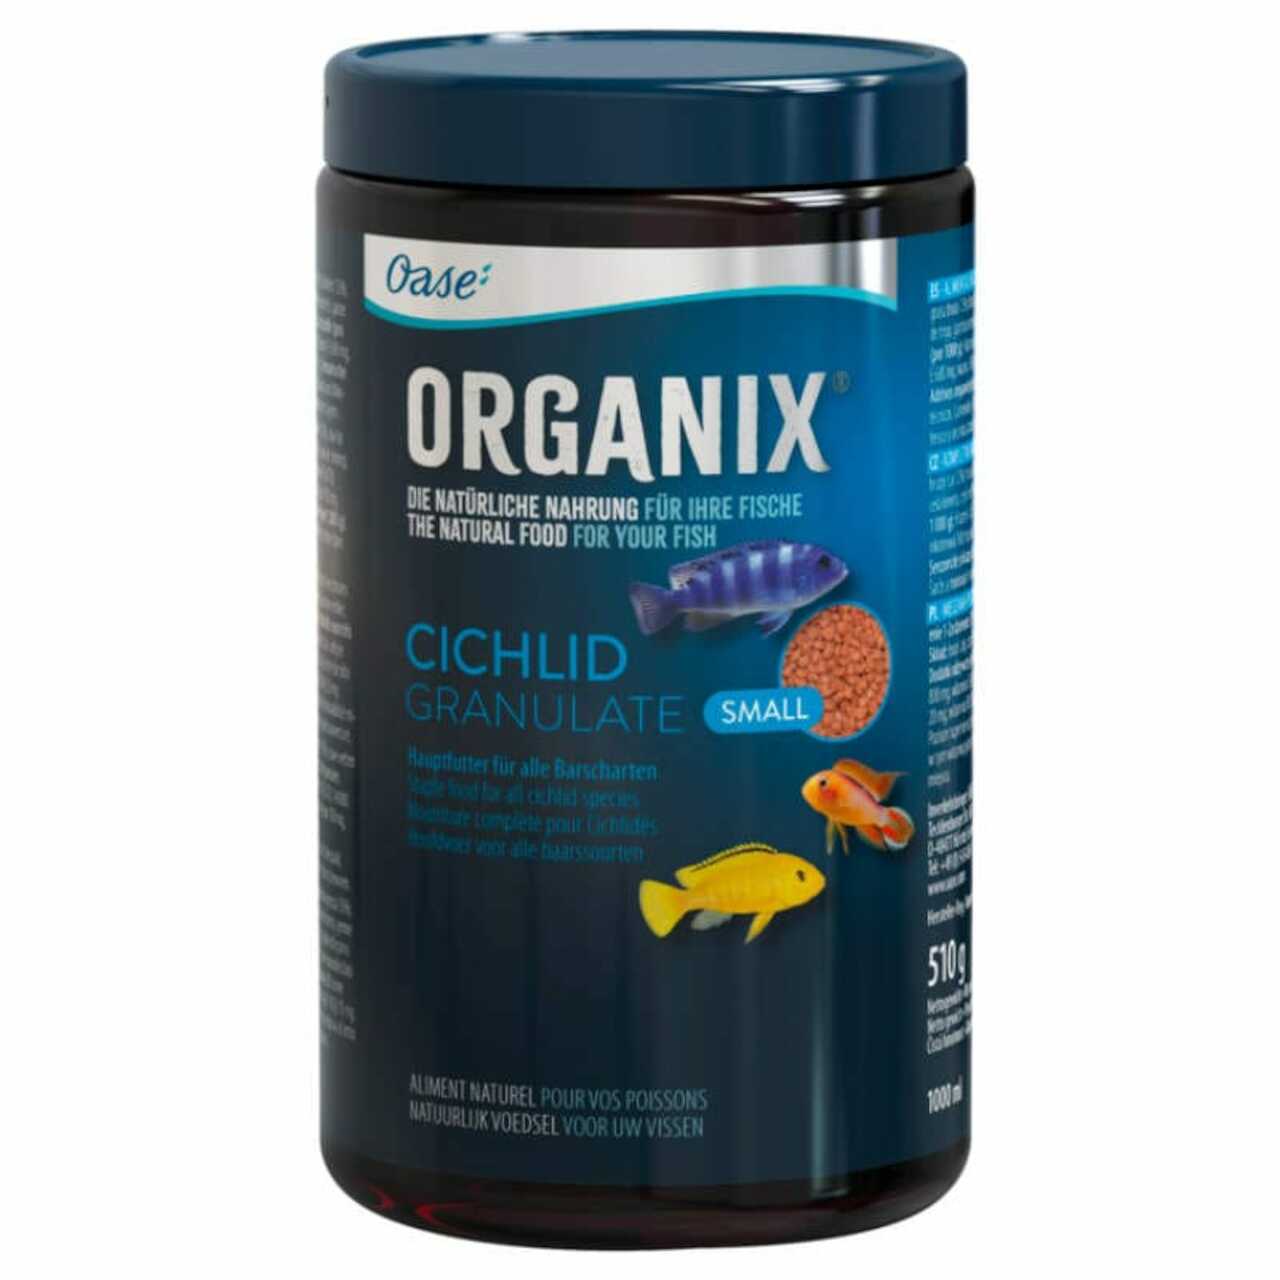 Oase Organix Cichlid Granulate